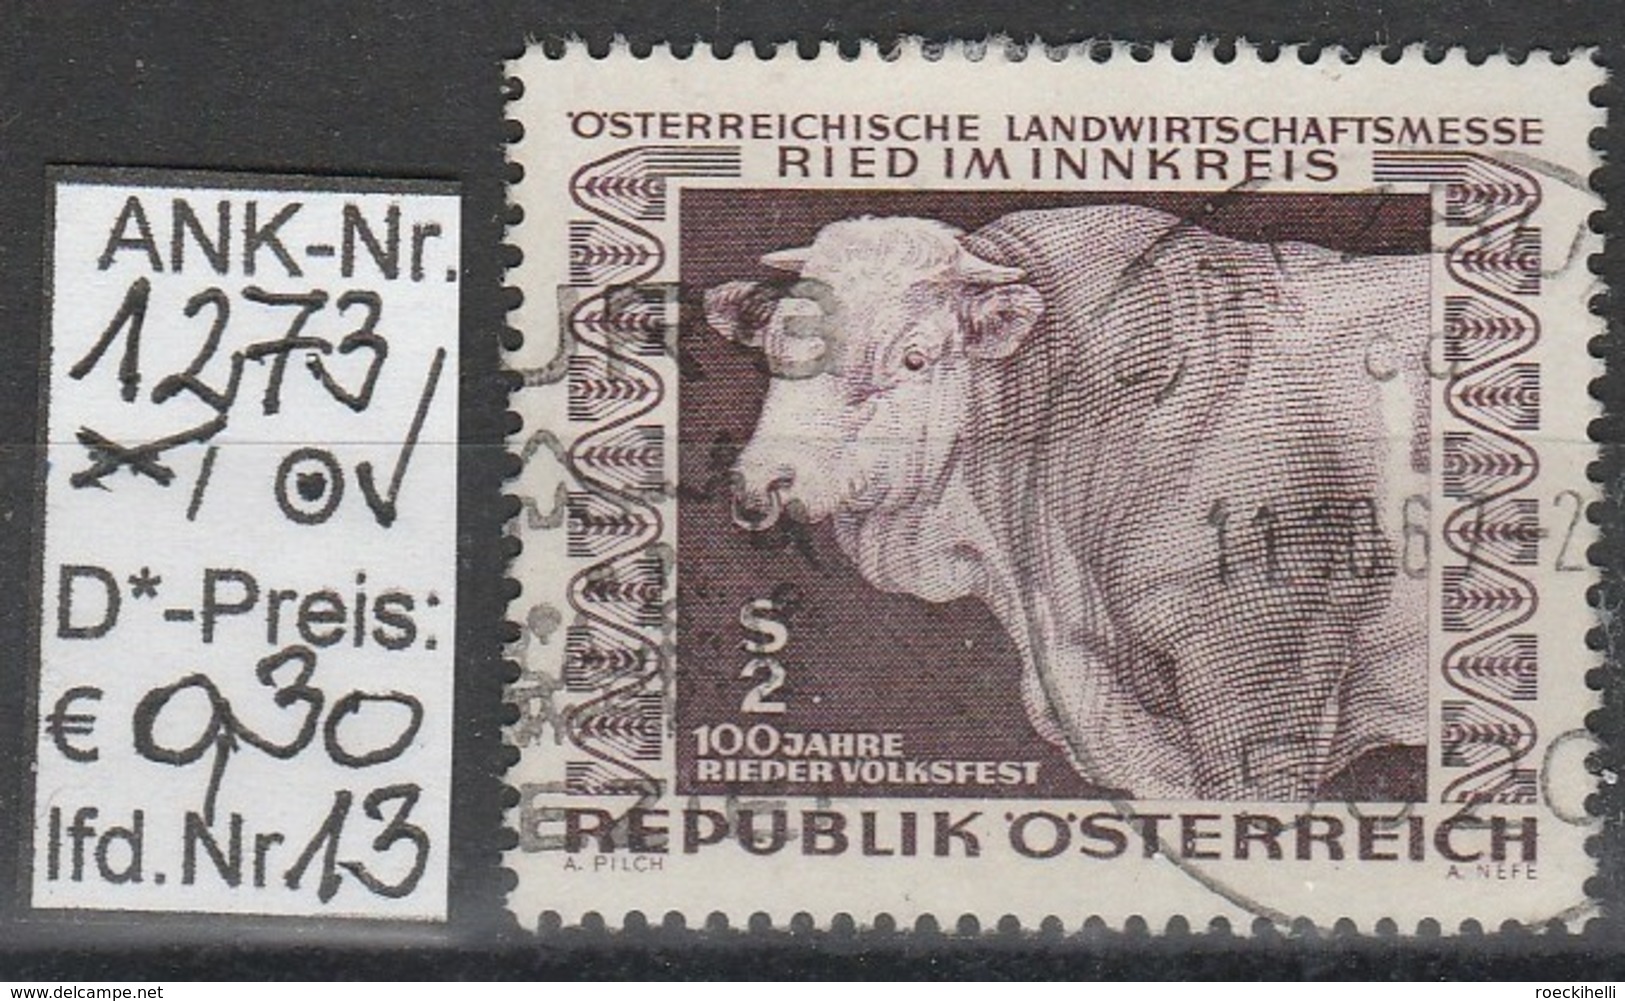 28.8.1967  -  SM  "100 Jahre Rieder Volksfest" - o gestempelt -  siehe Scan (1273o 01-13)